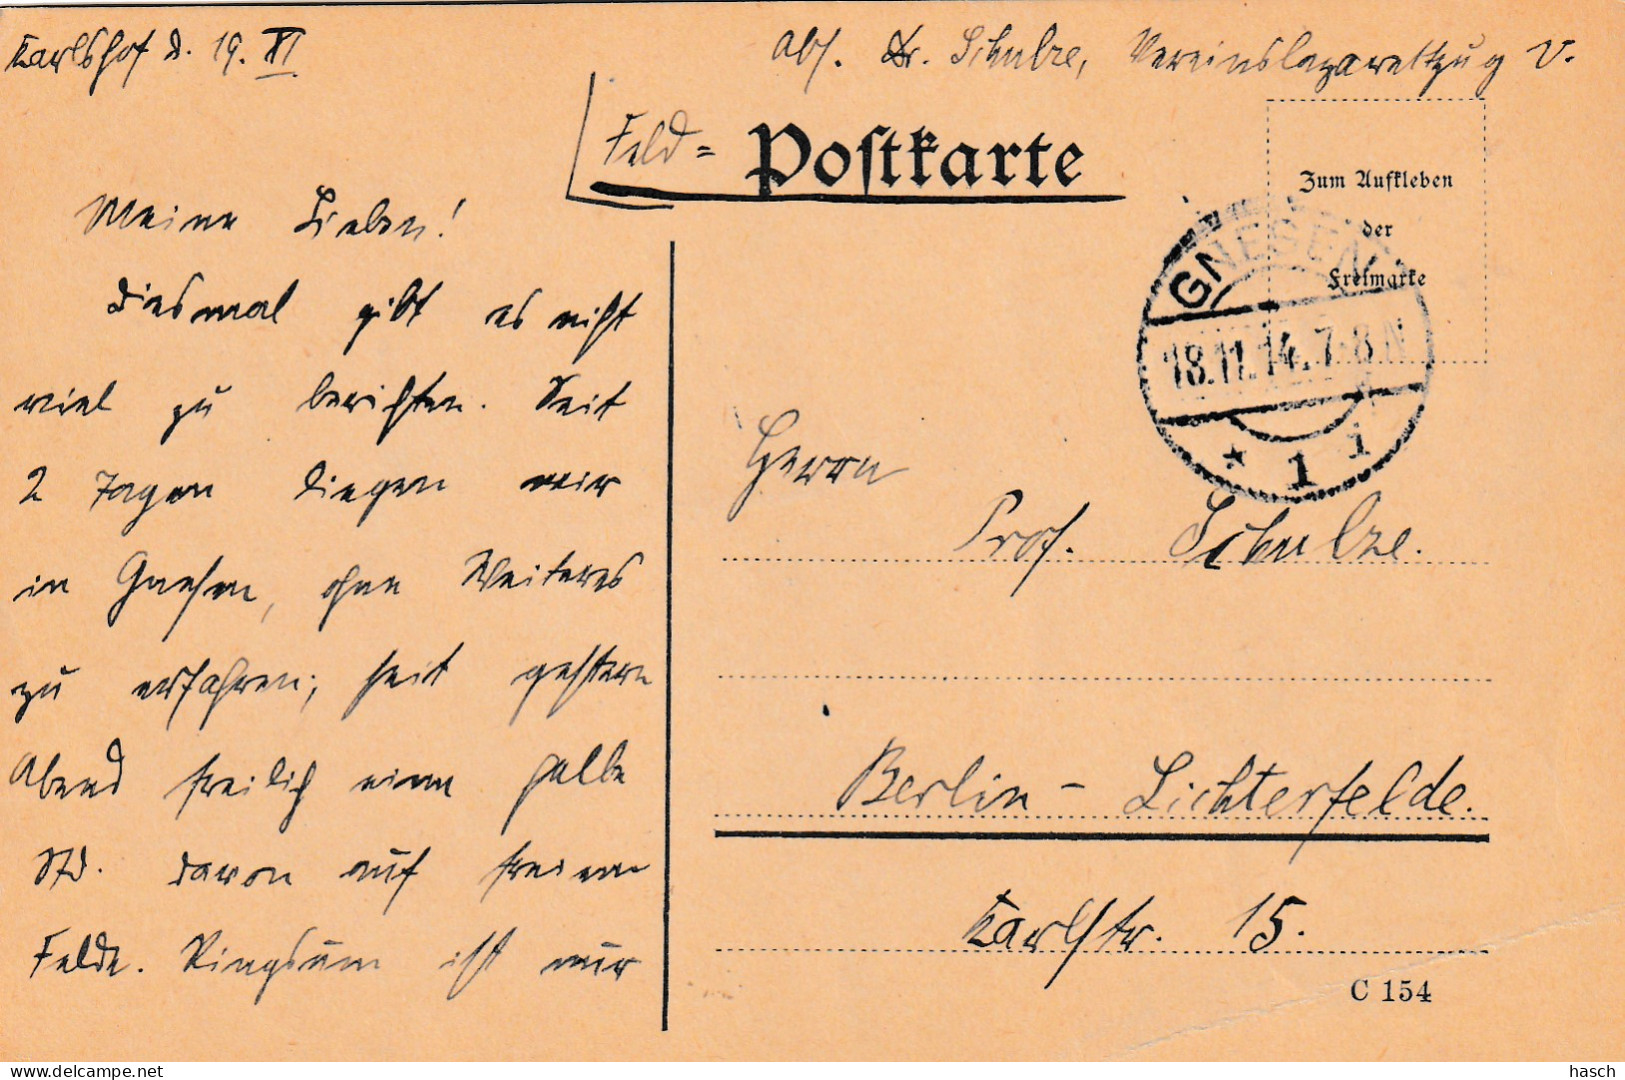 4935 7 Feldpostkarte 18-11-1914 Gnesen 1 (Polen) Nach Berlin Lichterfelde. Absender Dr Schulze, Krankenpfleger  - Oorlog 1914-18